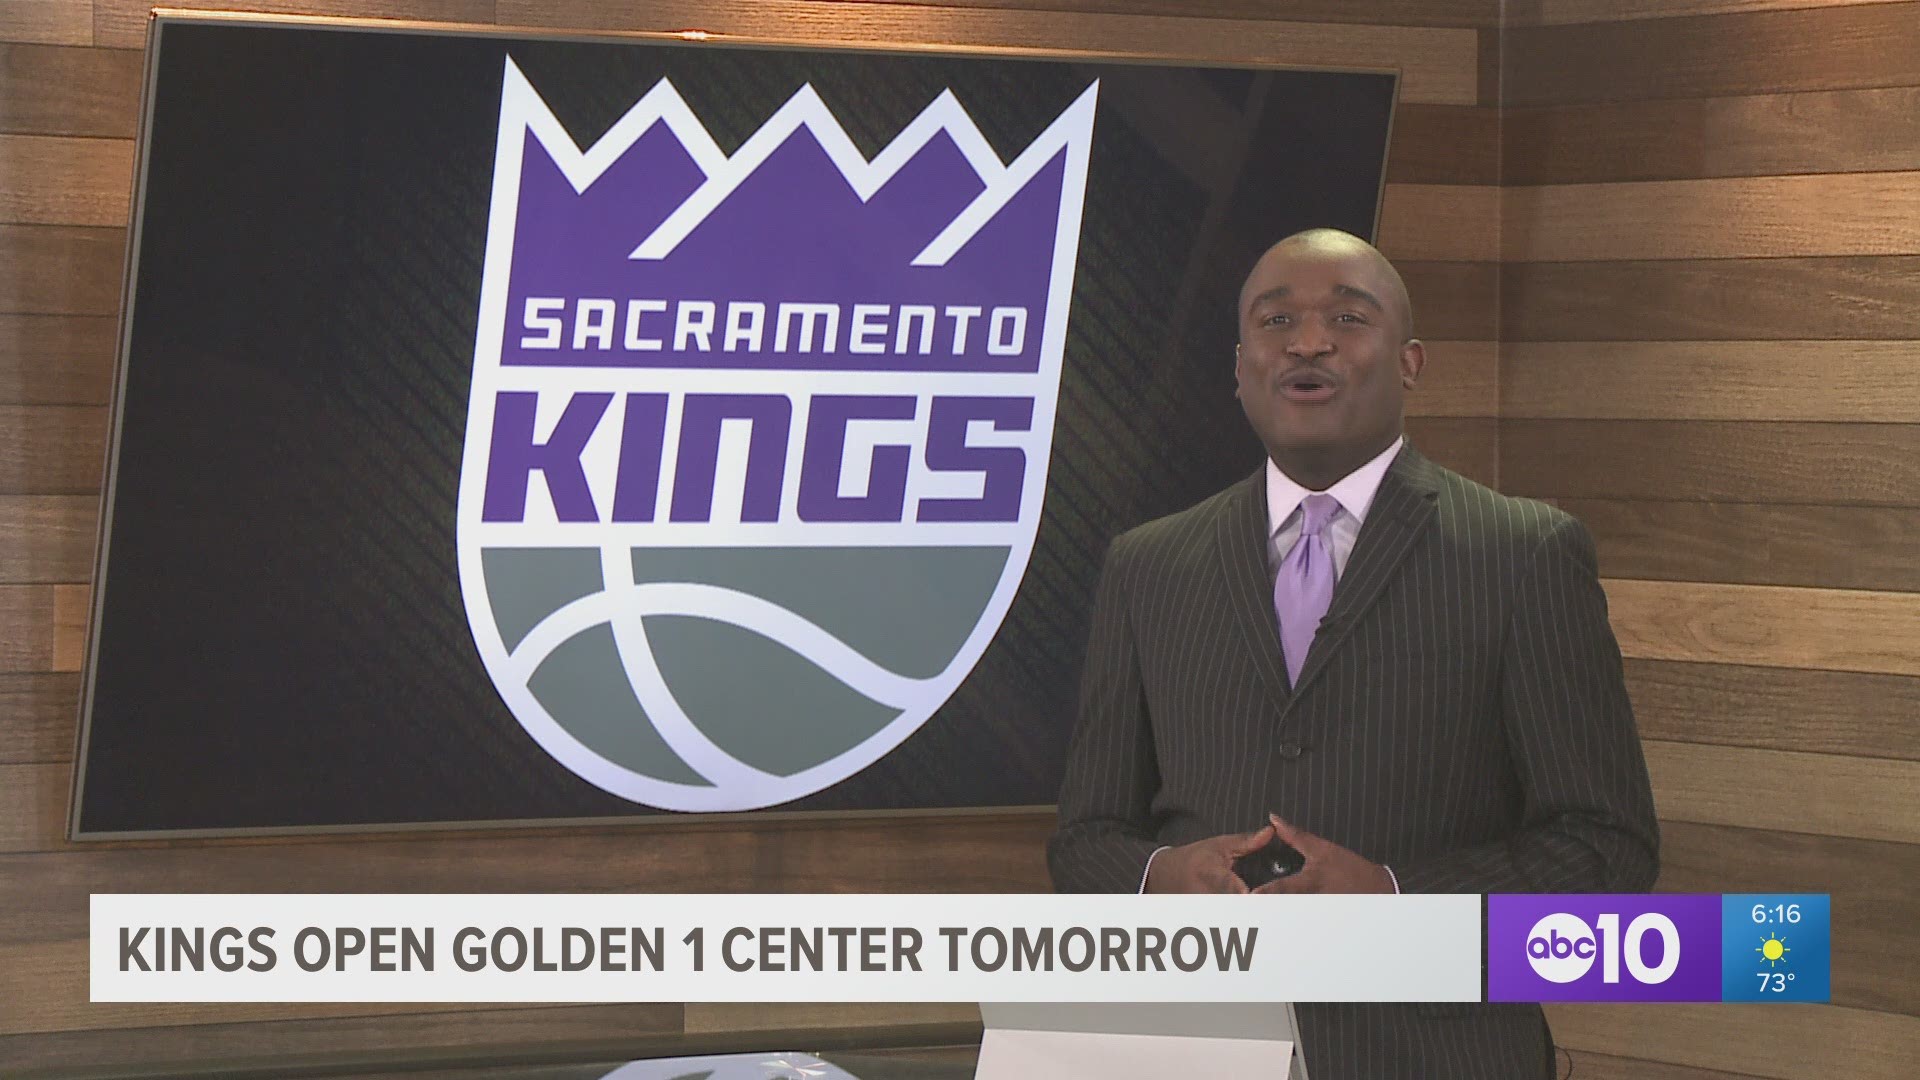 ABC10's Lina Washington gives us a quick break down of some key Sacramento Kings players to watch this season.